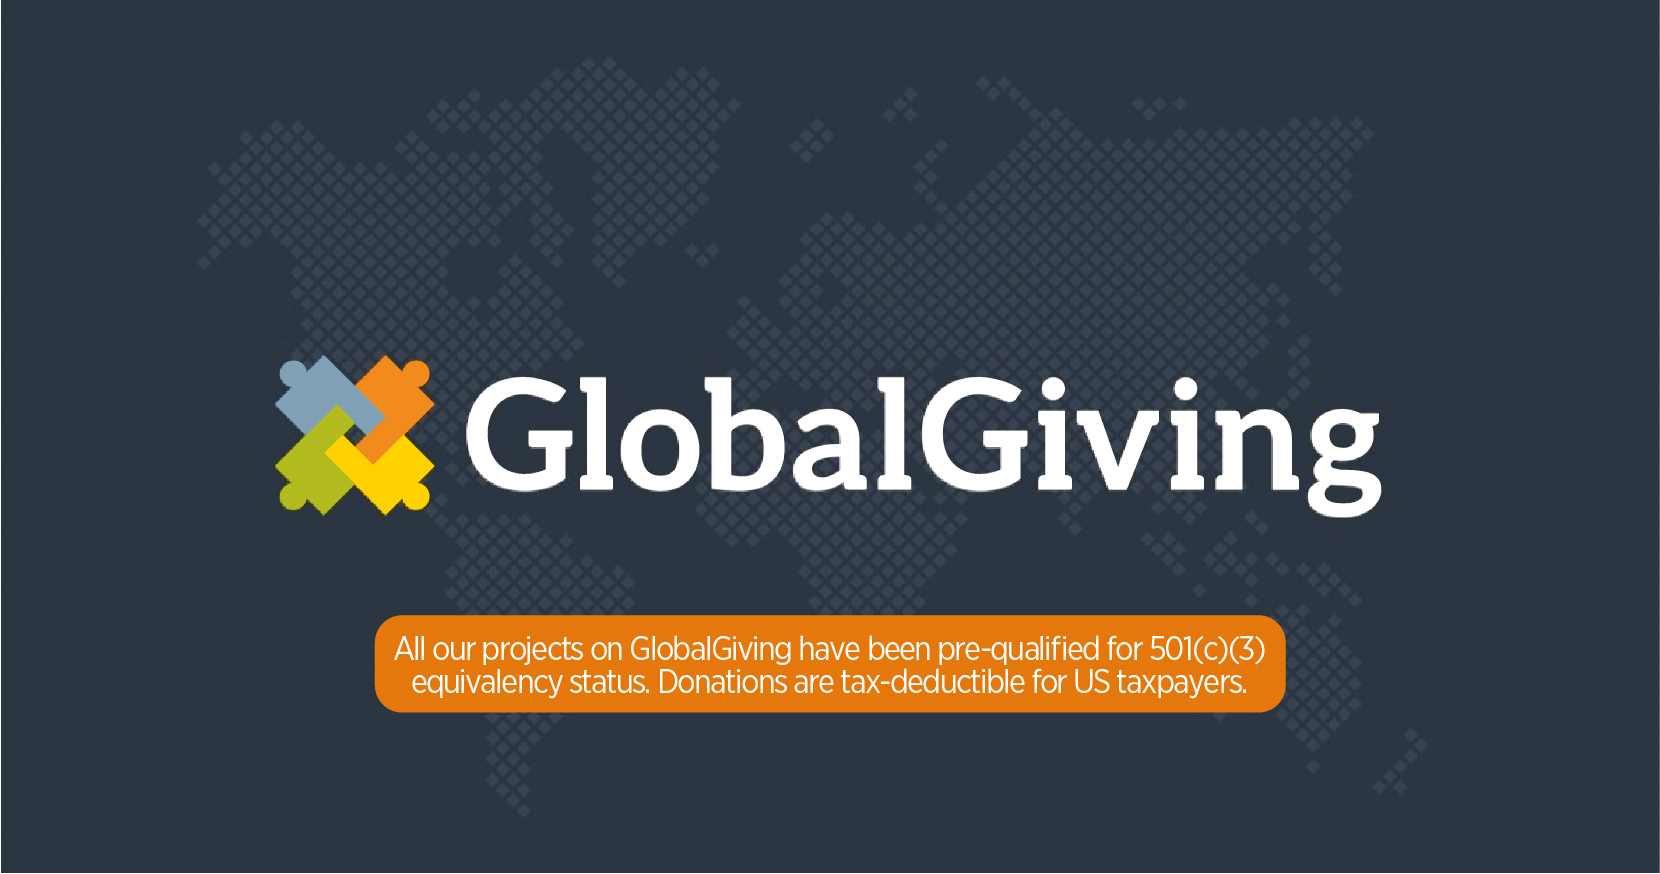 GlobalGiving